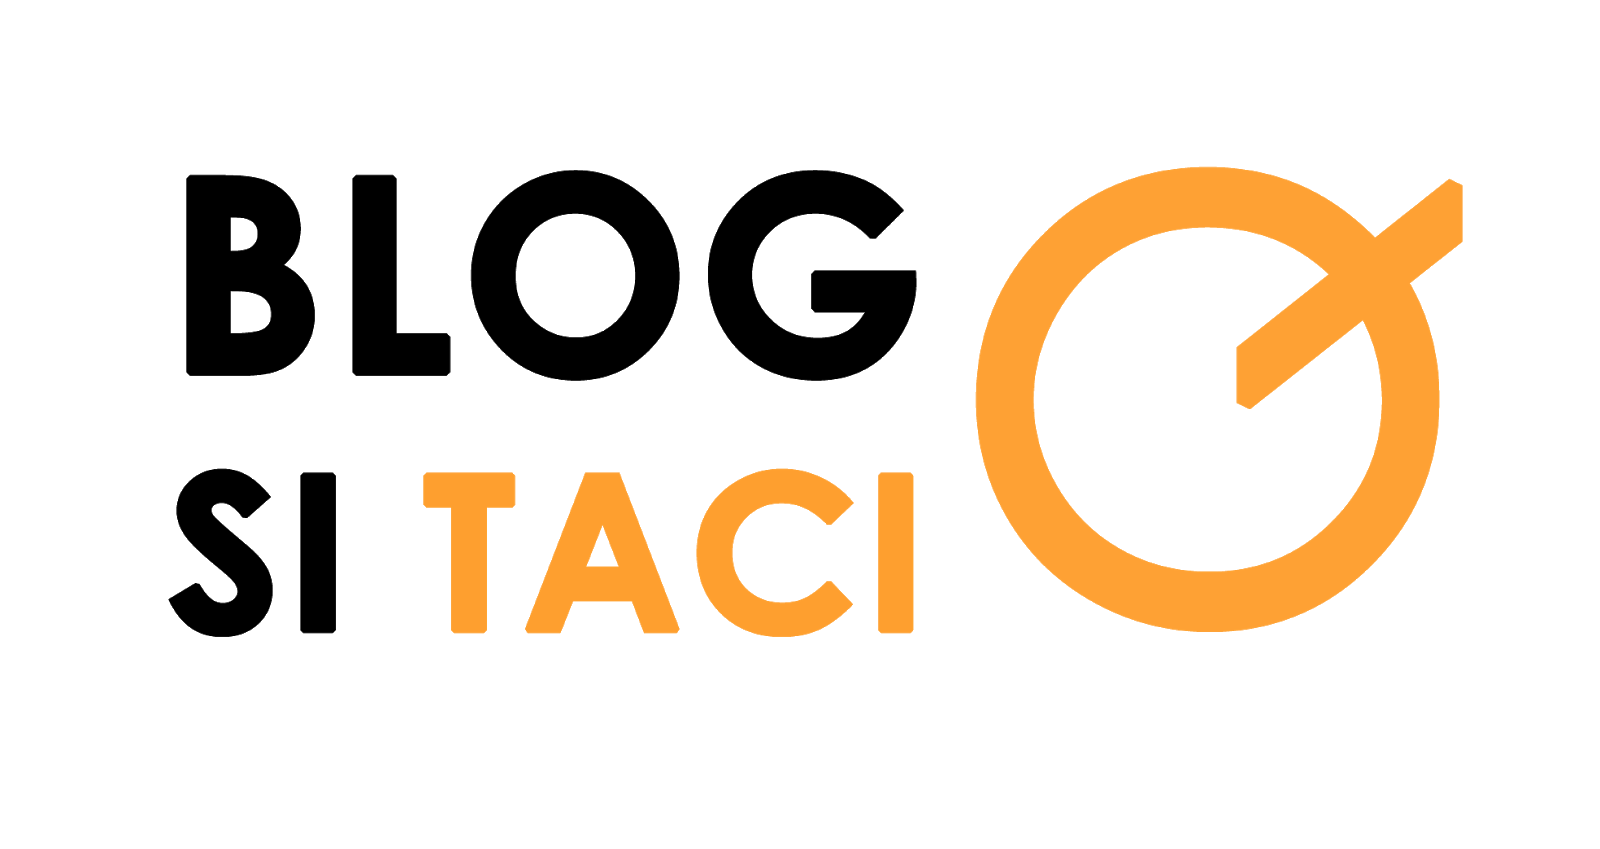 Taciq